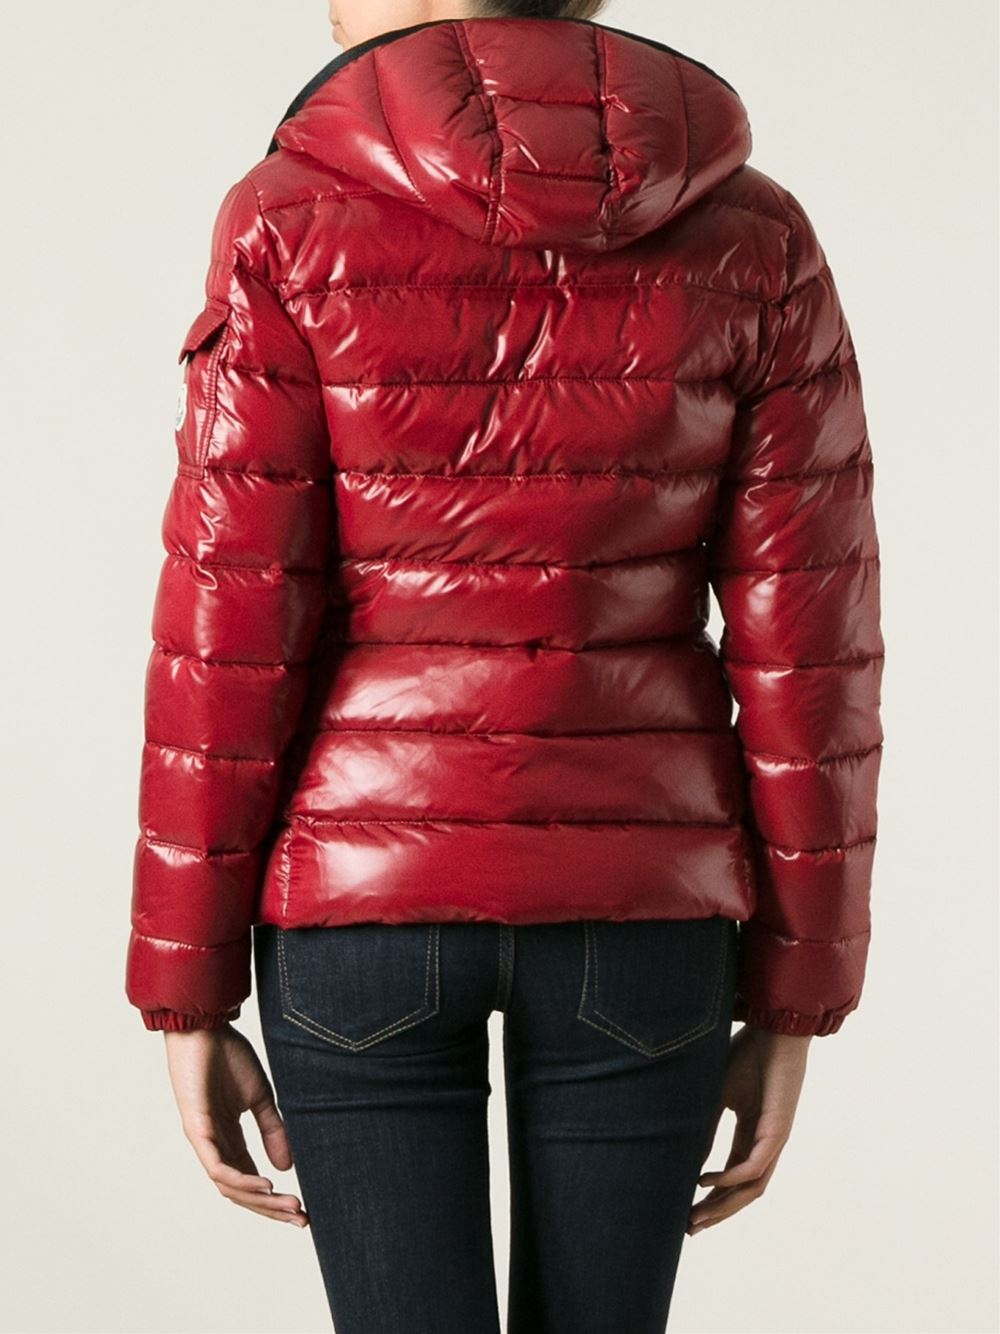 Red Moncler Jacket Flash Sales, 53% OFF | www.ingeniovirtual.com